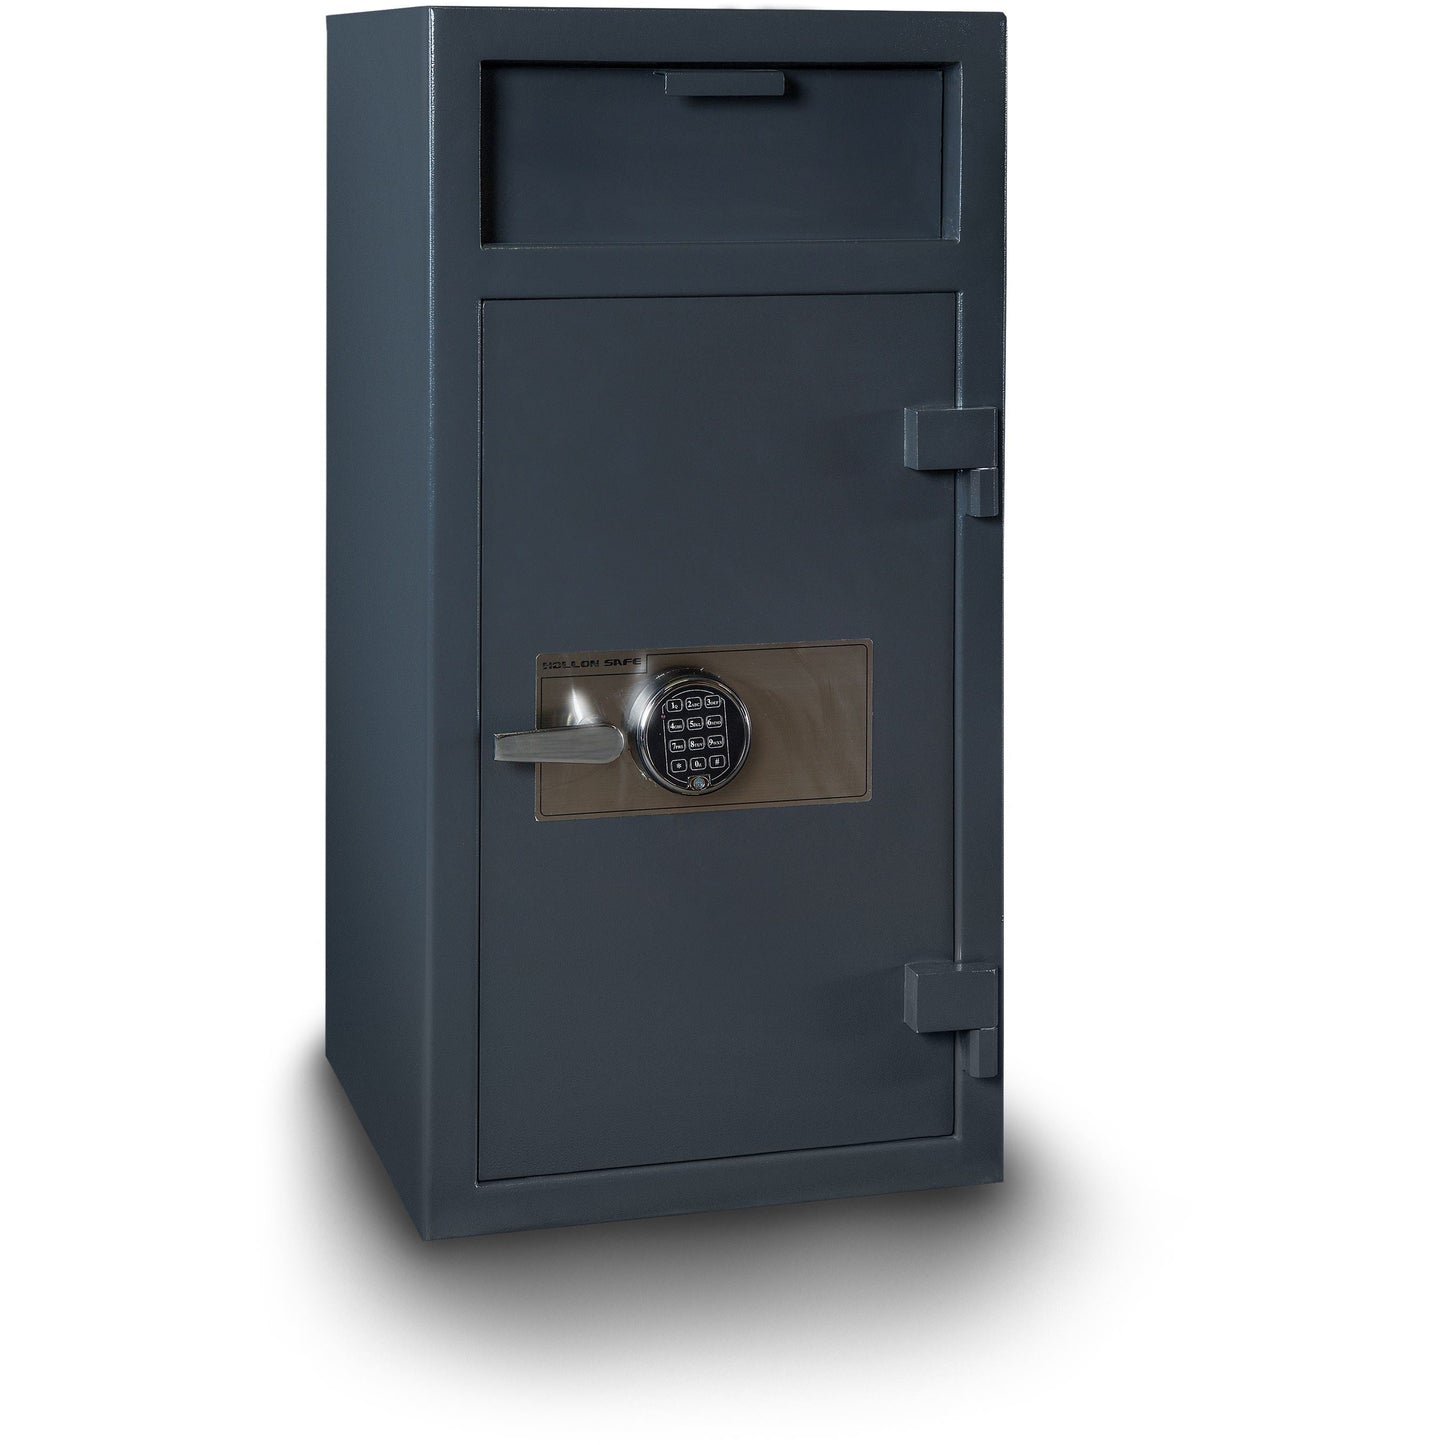 Hollon FD-4020 Depository Safe | Inner Locking Department